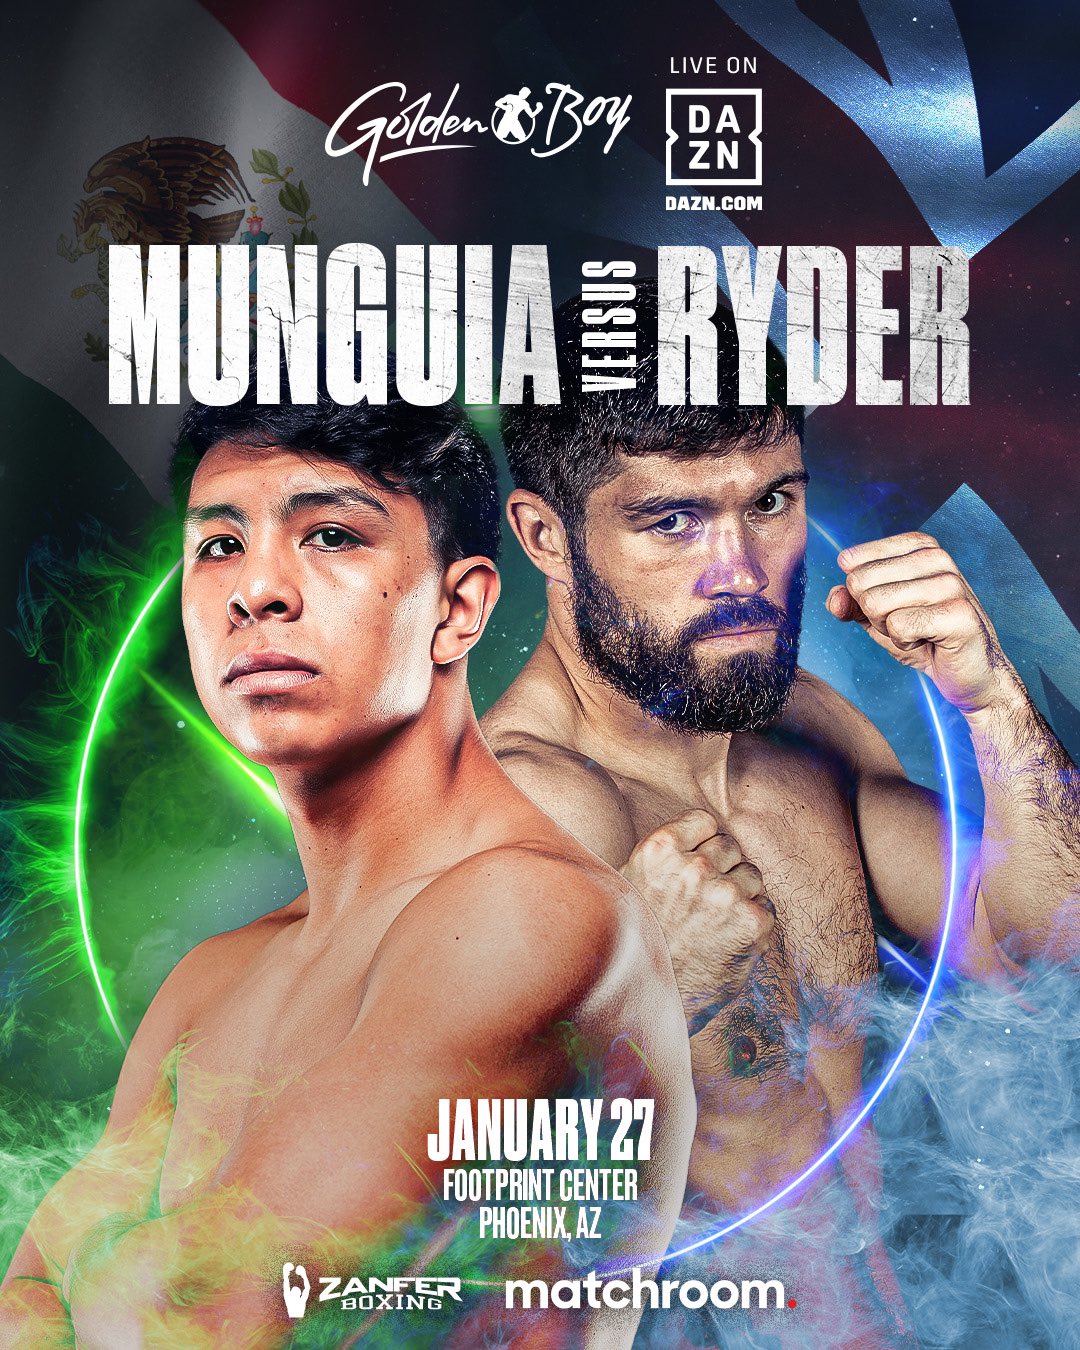 Munguia-Ryder set for January 27th